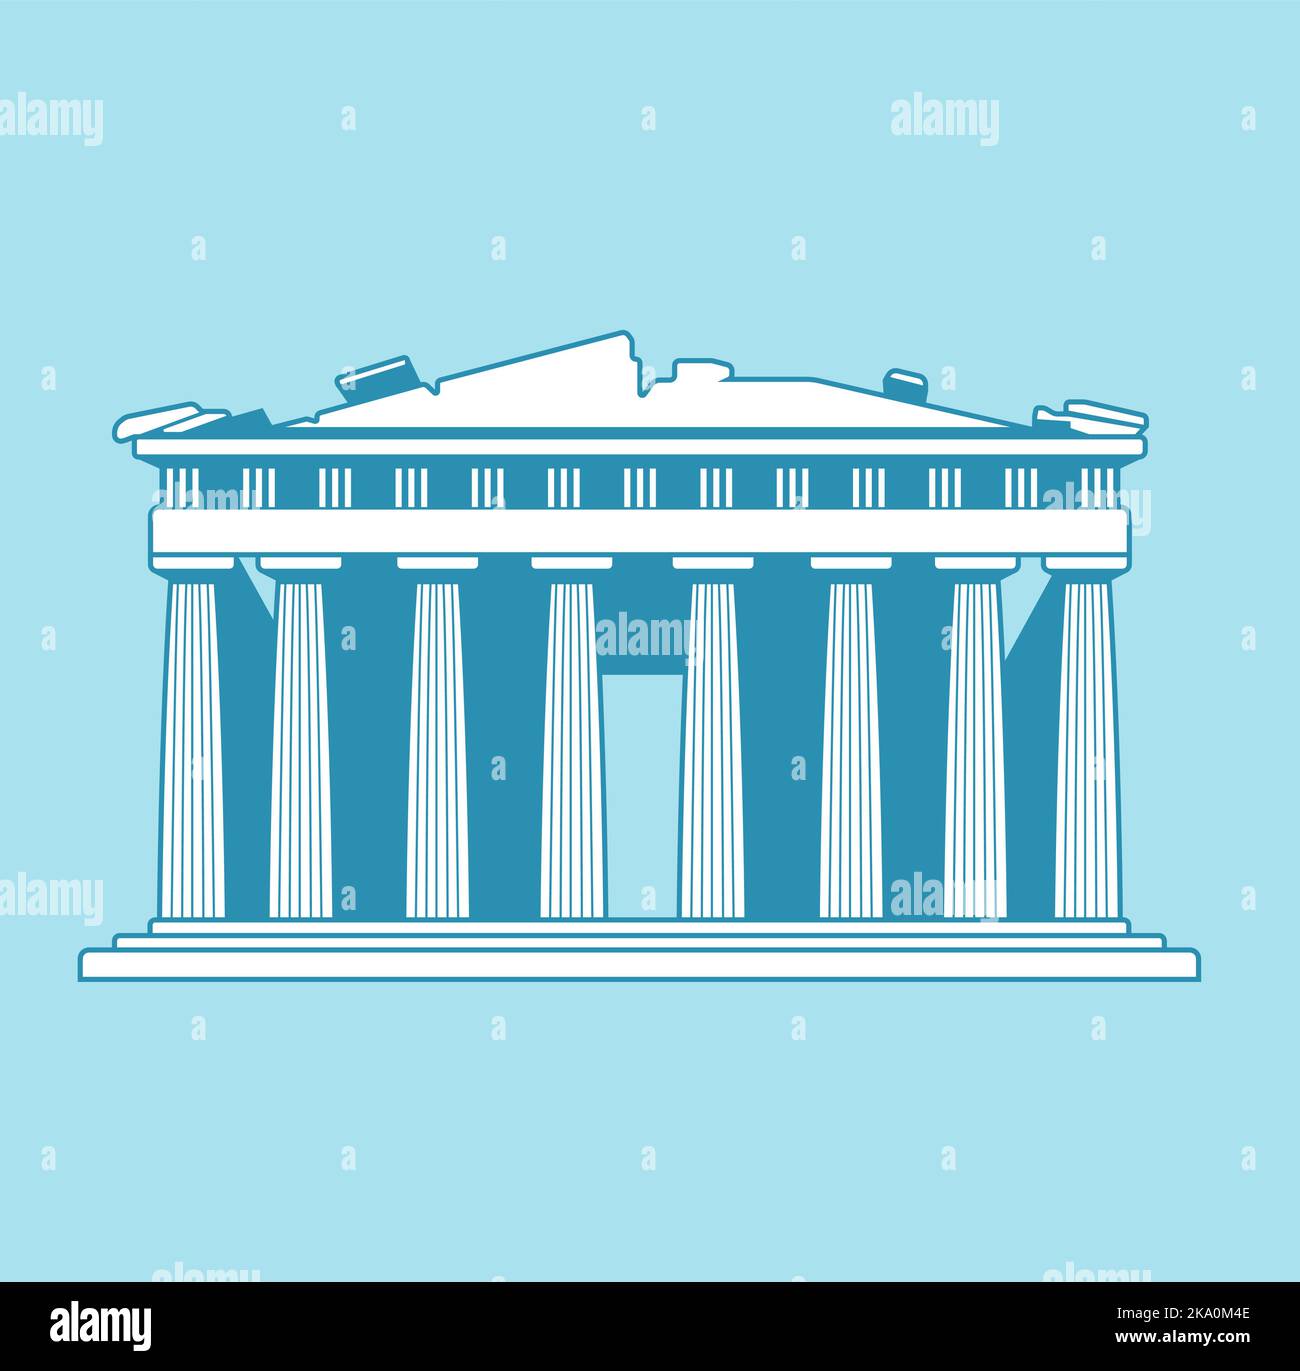 Parthenon temple - Greece | World famous buildings vector illustration Stock Vector